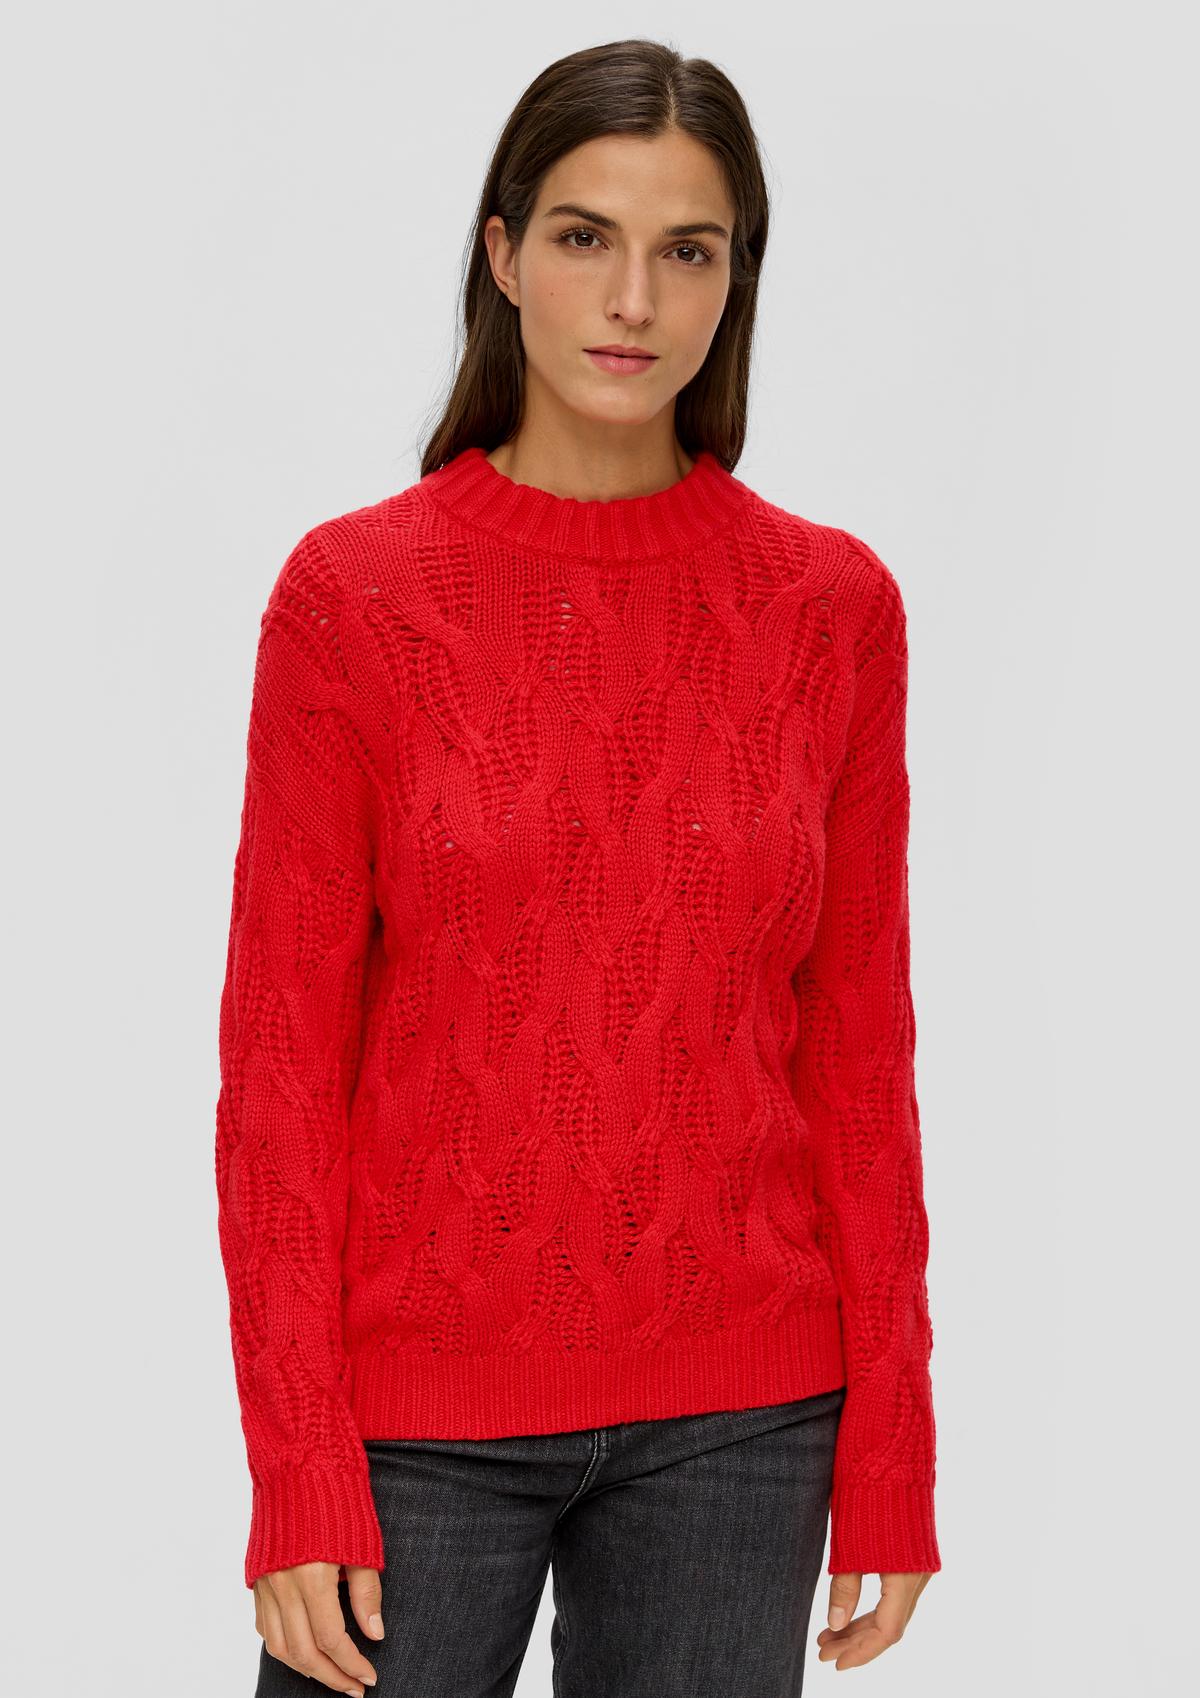 Knitted jumper in a viscose blend